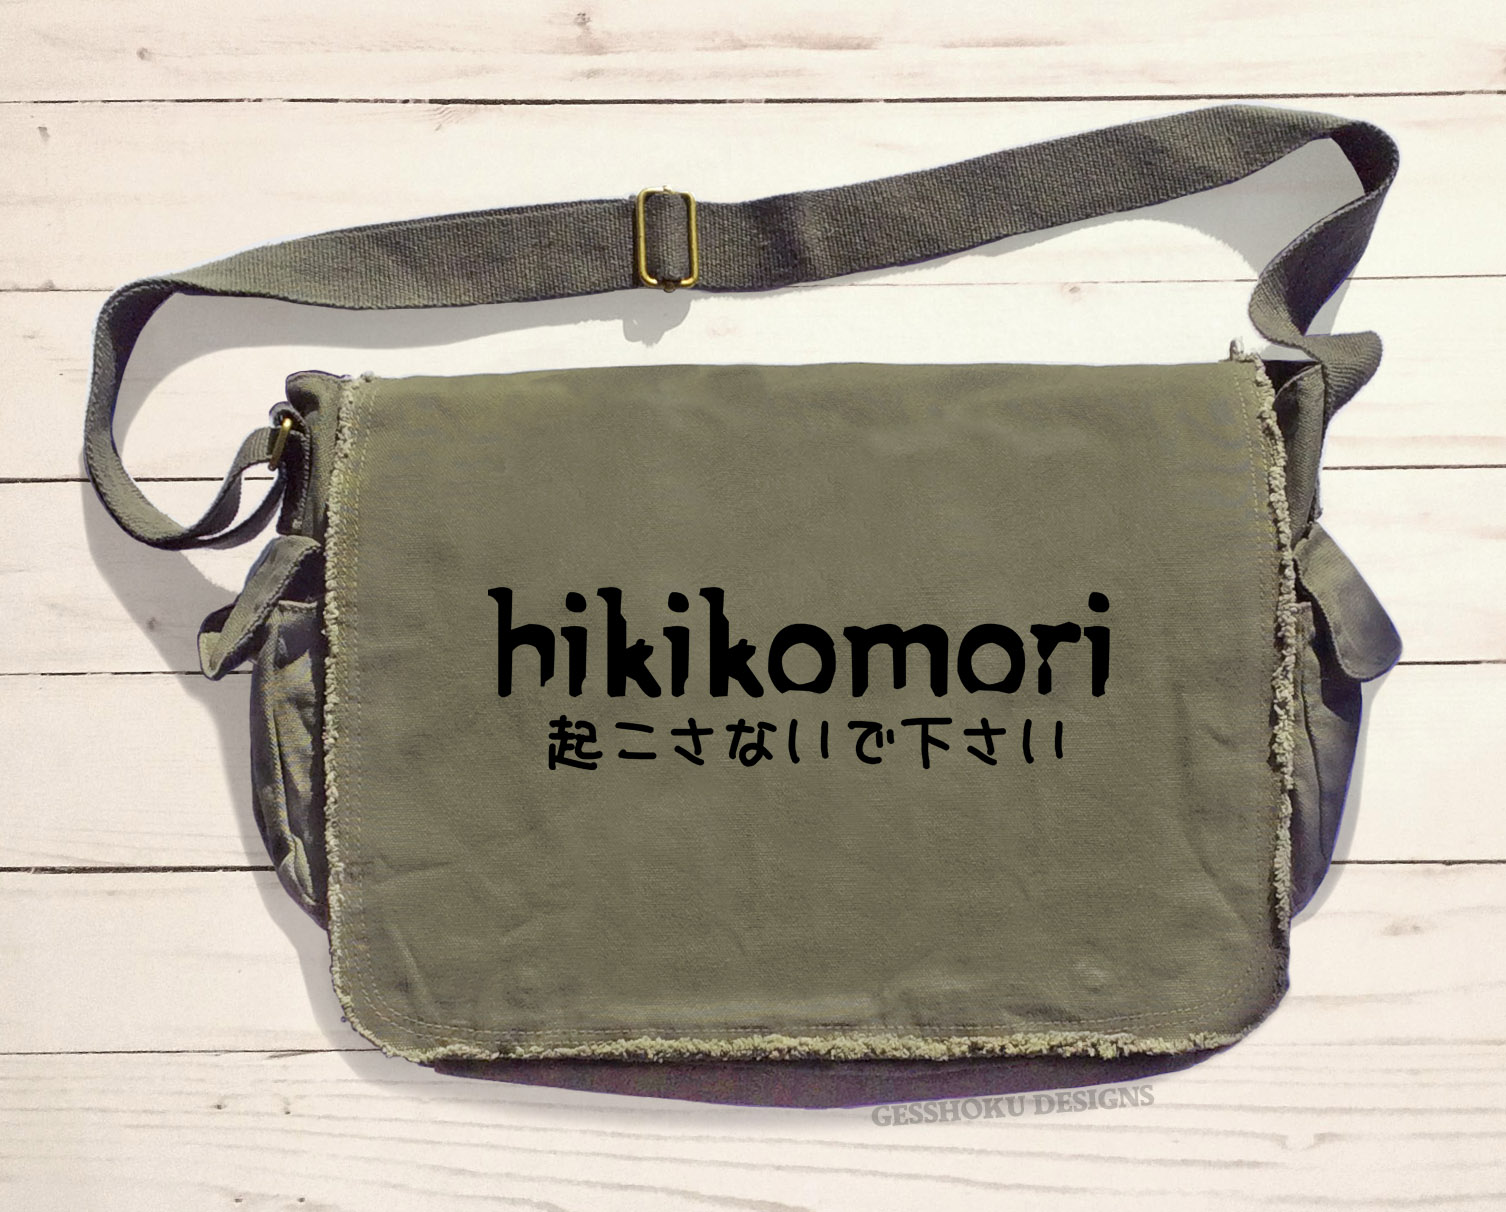 Hikikomori Messenger Bag - Khaki Green